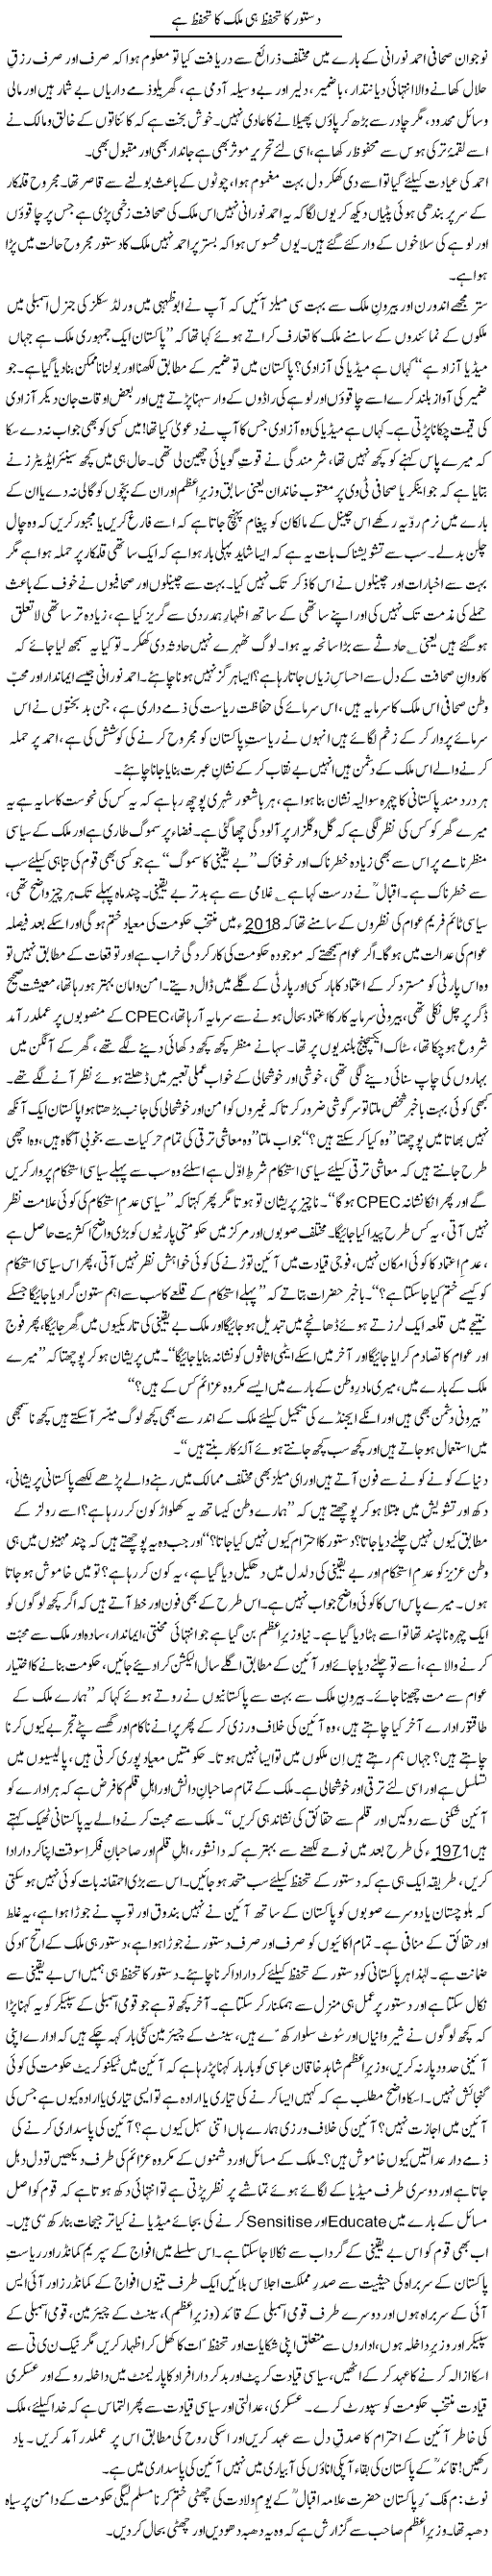 Dastoor Ka Tahaffuz Hi Mulk Ka Tahaffuz Hai | Zulfiqar Ahmed Cheema | Daily Urdu Columns